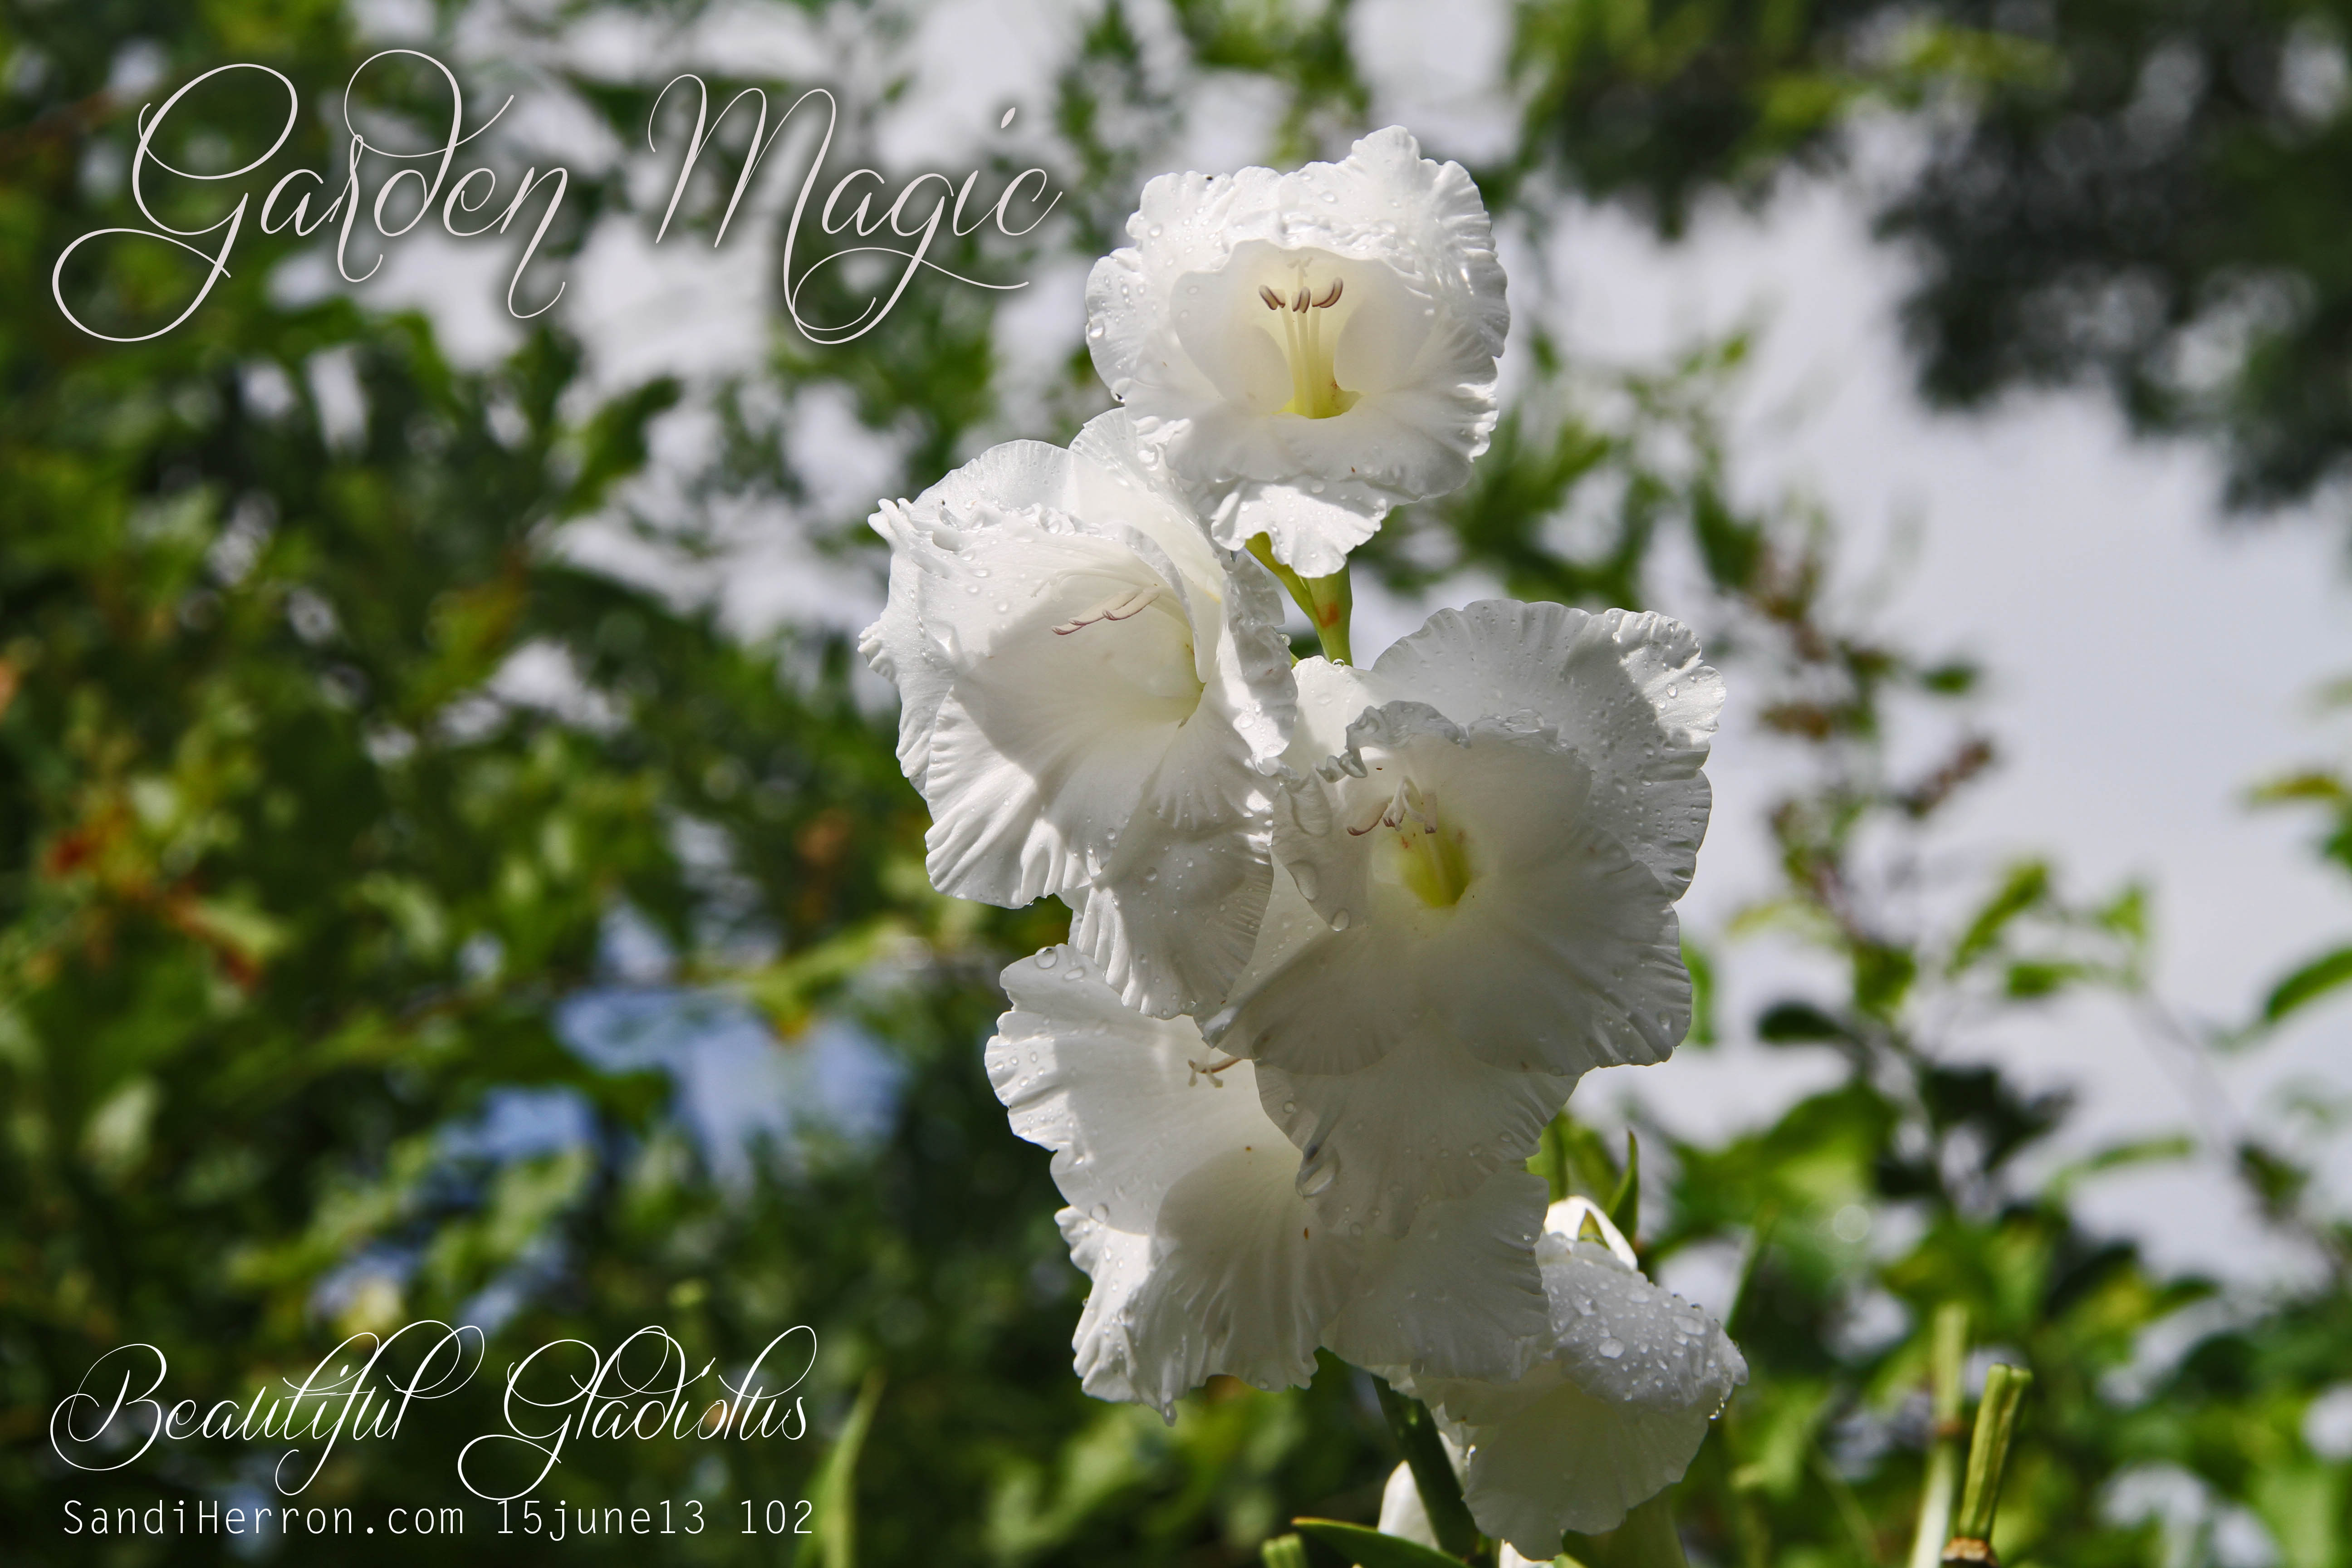 Gardening: Garden Magic with Beautiful Gladiolus